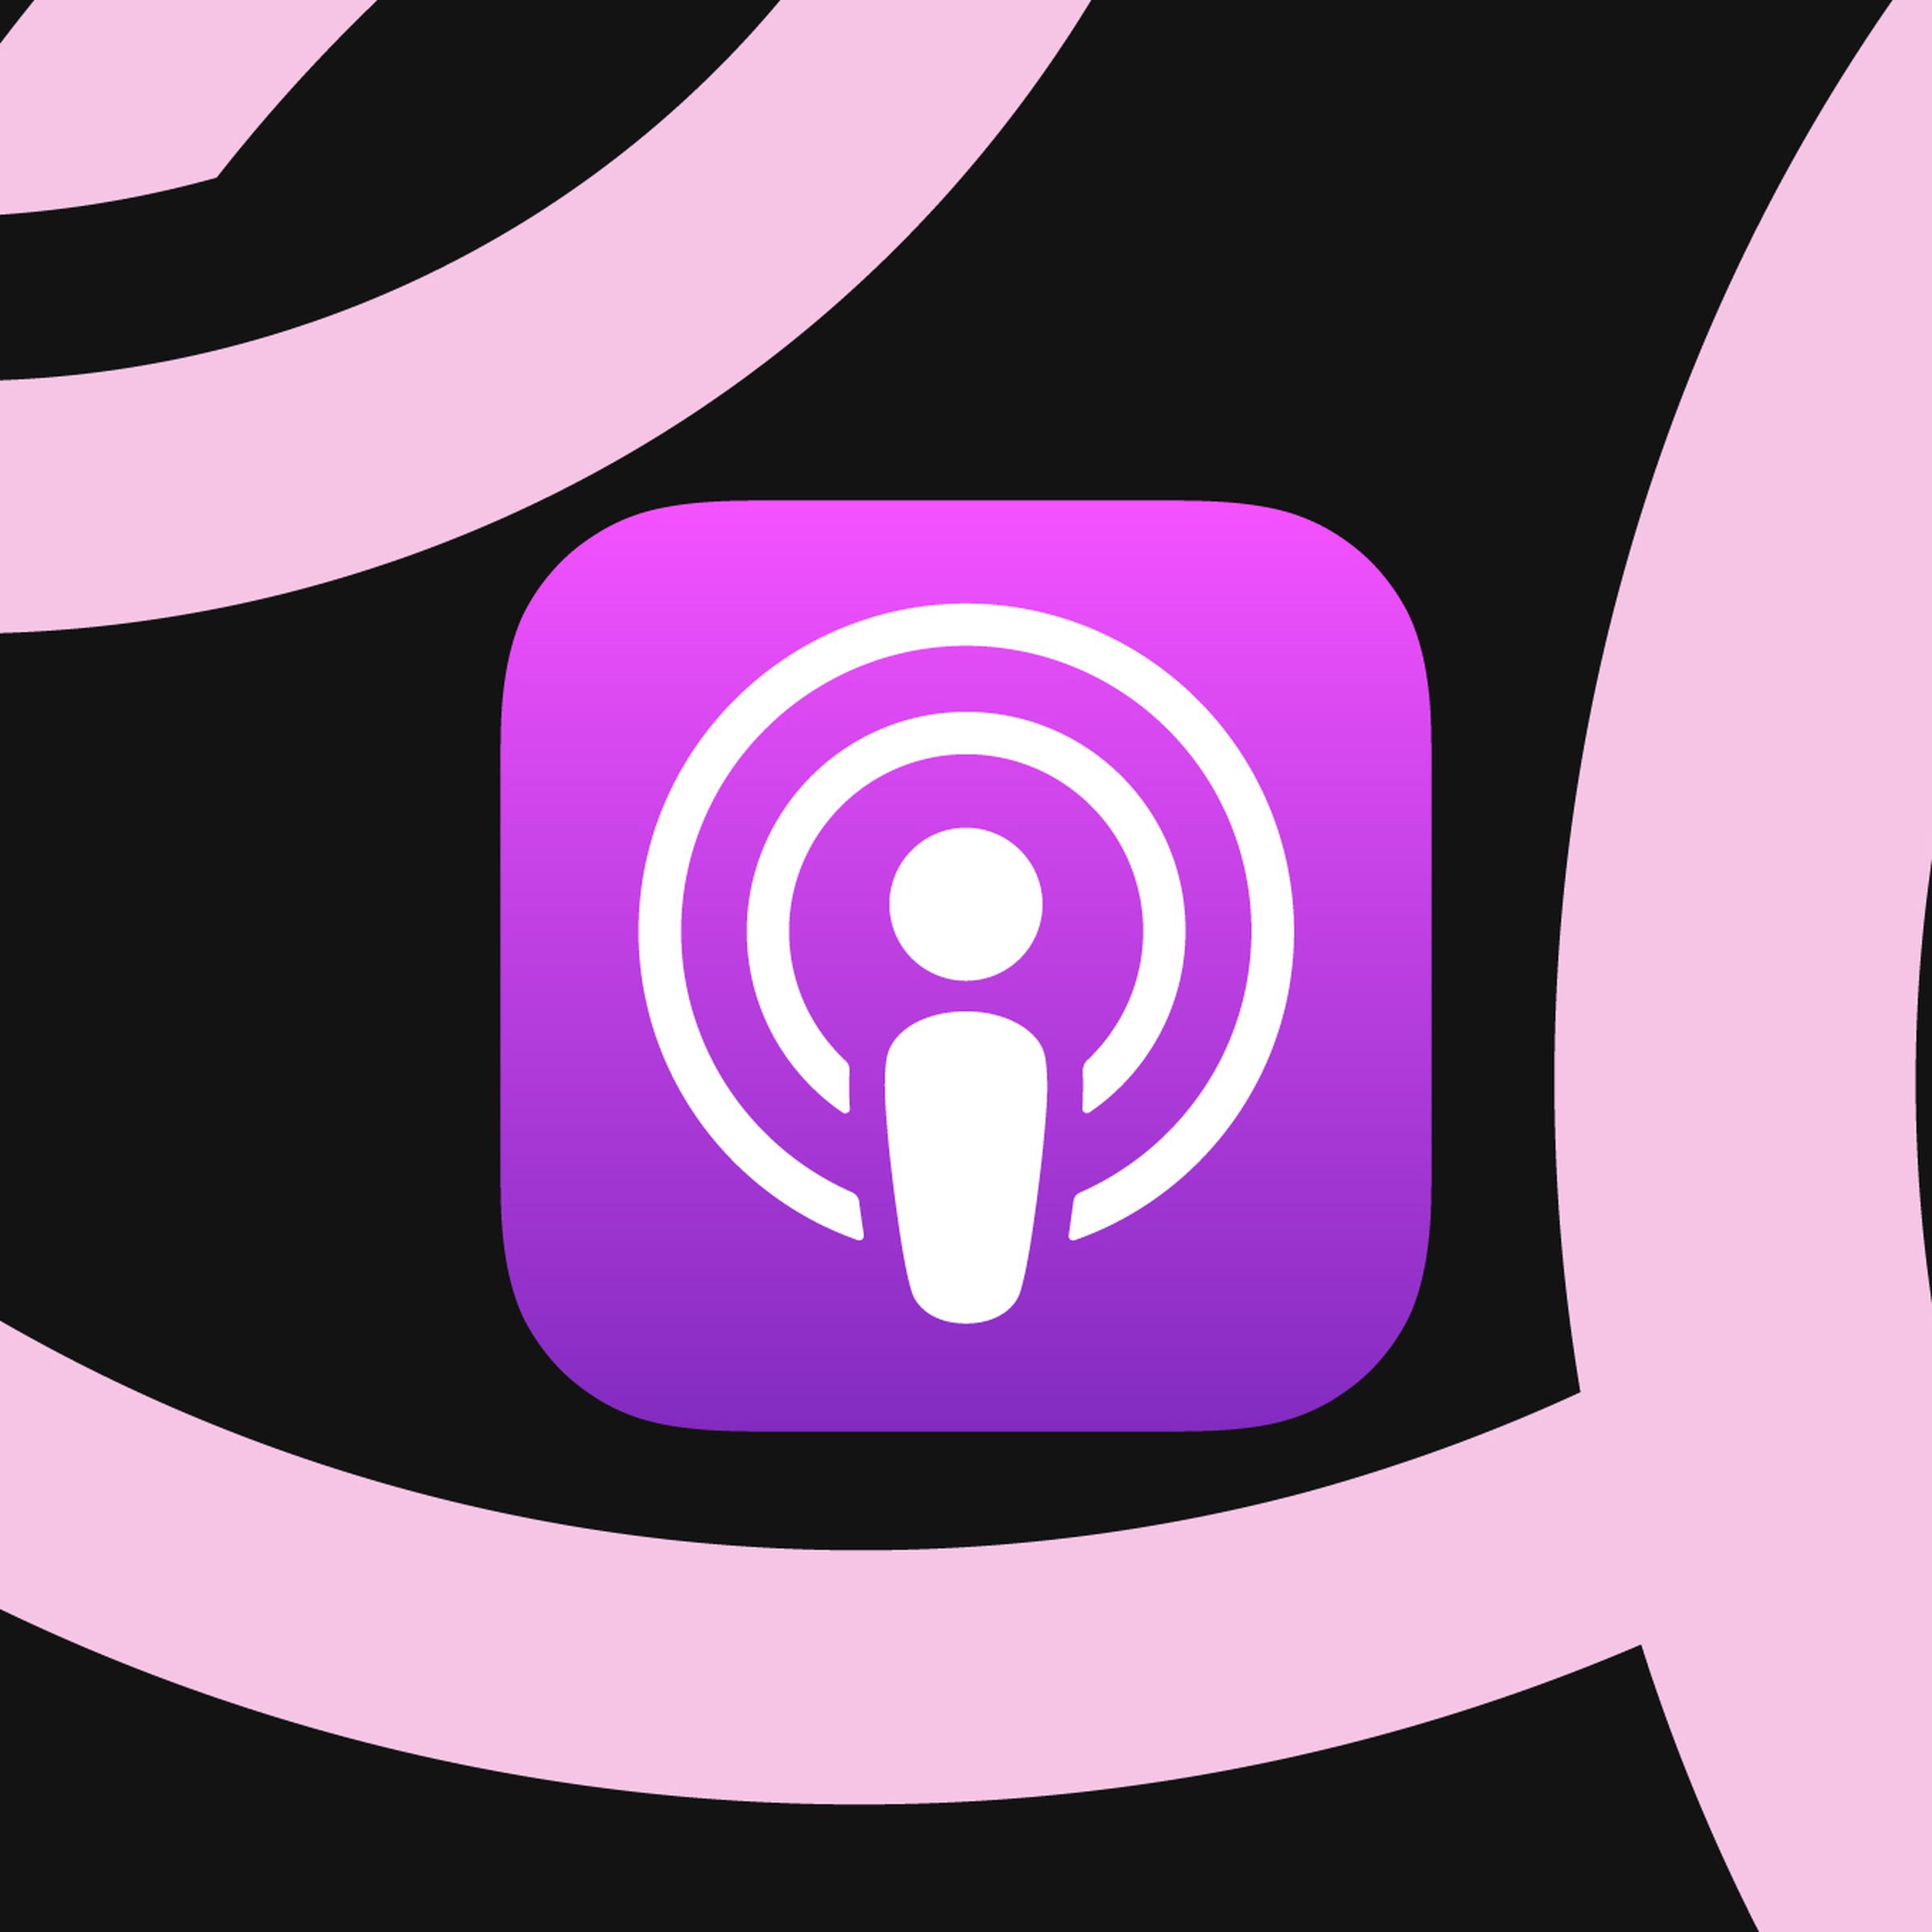 Apple Podcasts logo illustration